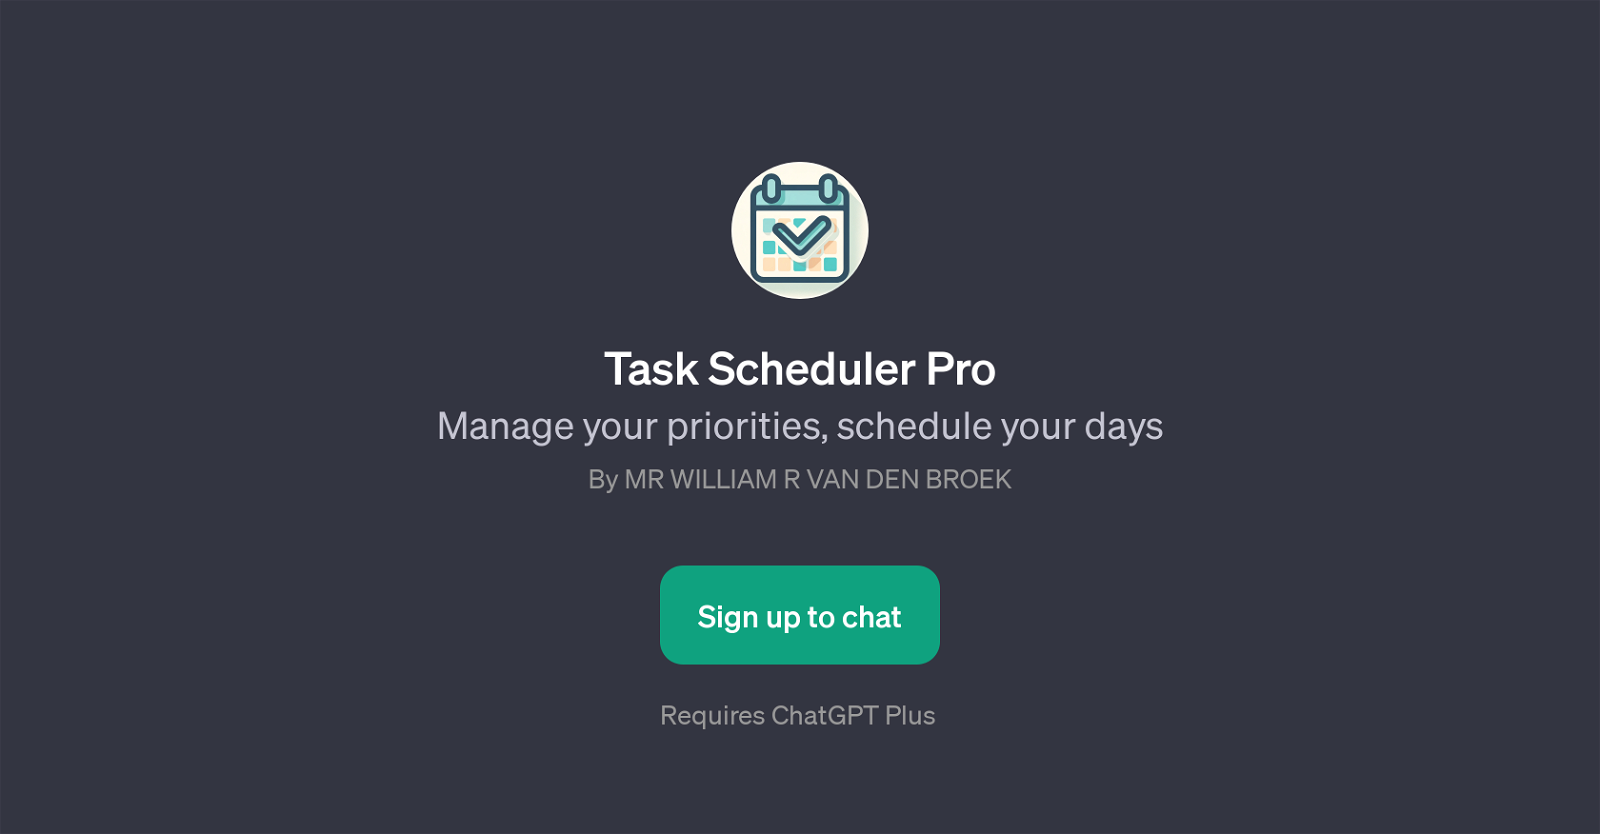 Task Scheduler Pro website